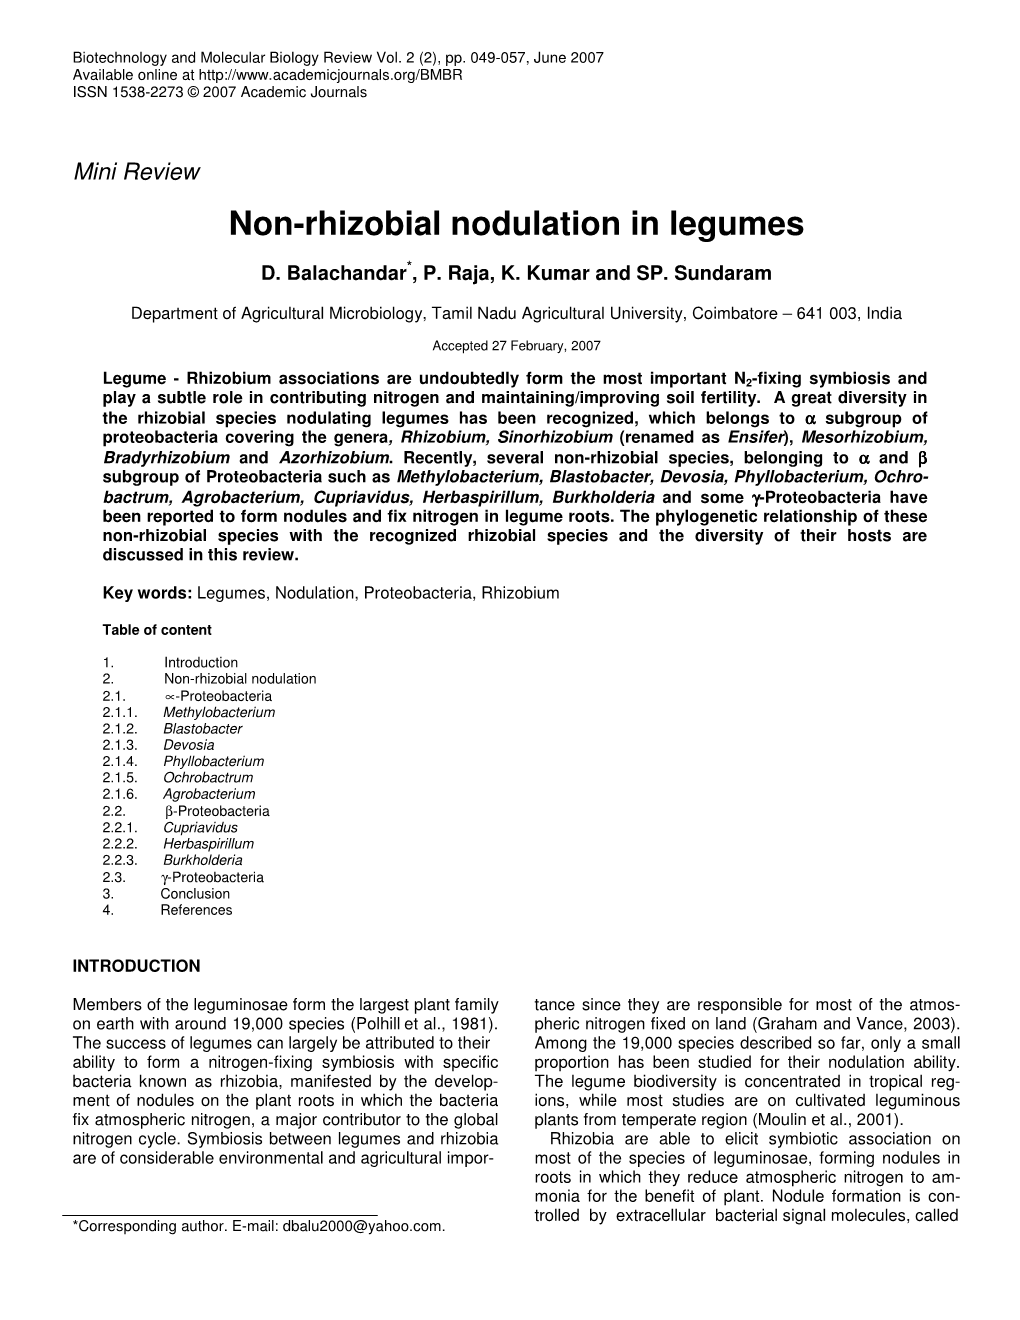 Non-Rhizobial Nodulation in Legumes